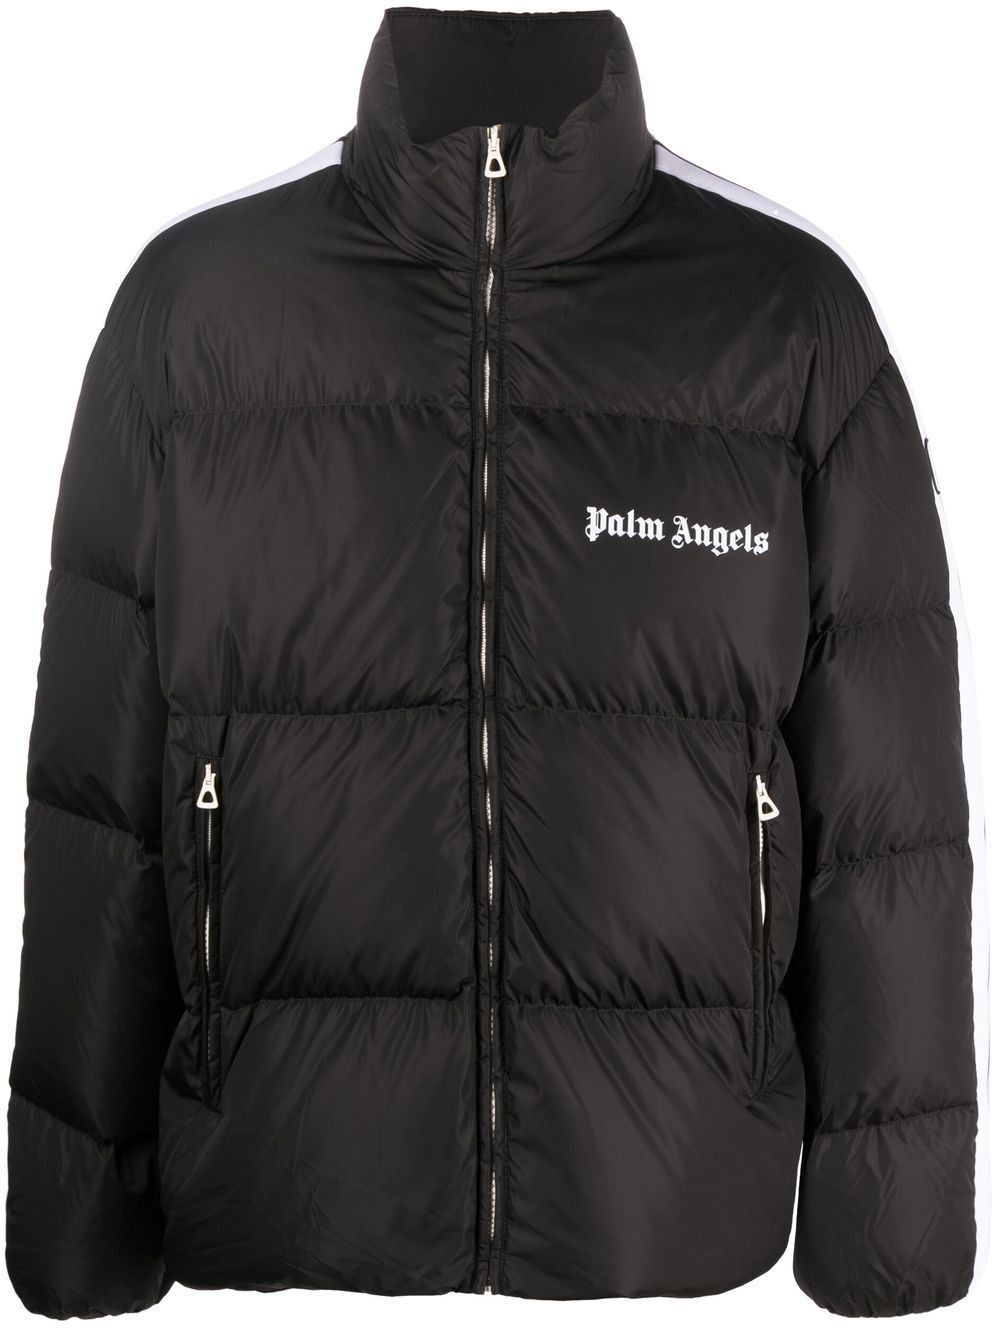 PALM ANGELS: Jacket kids - Black  PALM ANGELS jacket PBEH002F23FAB001  online at